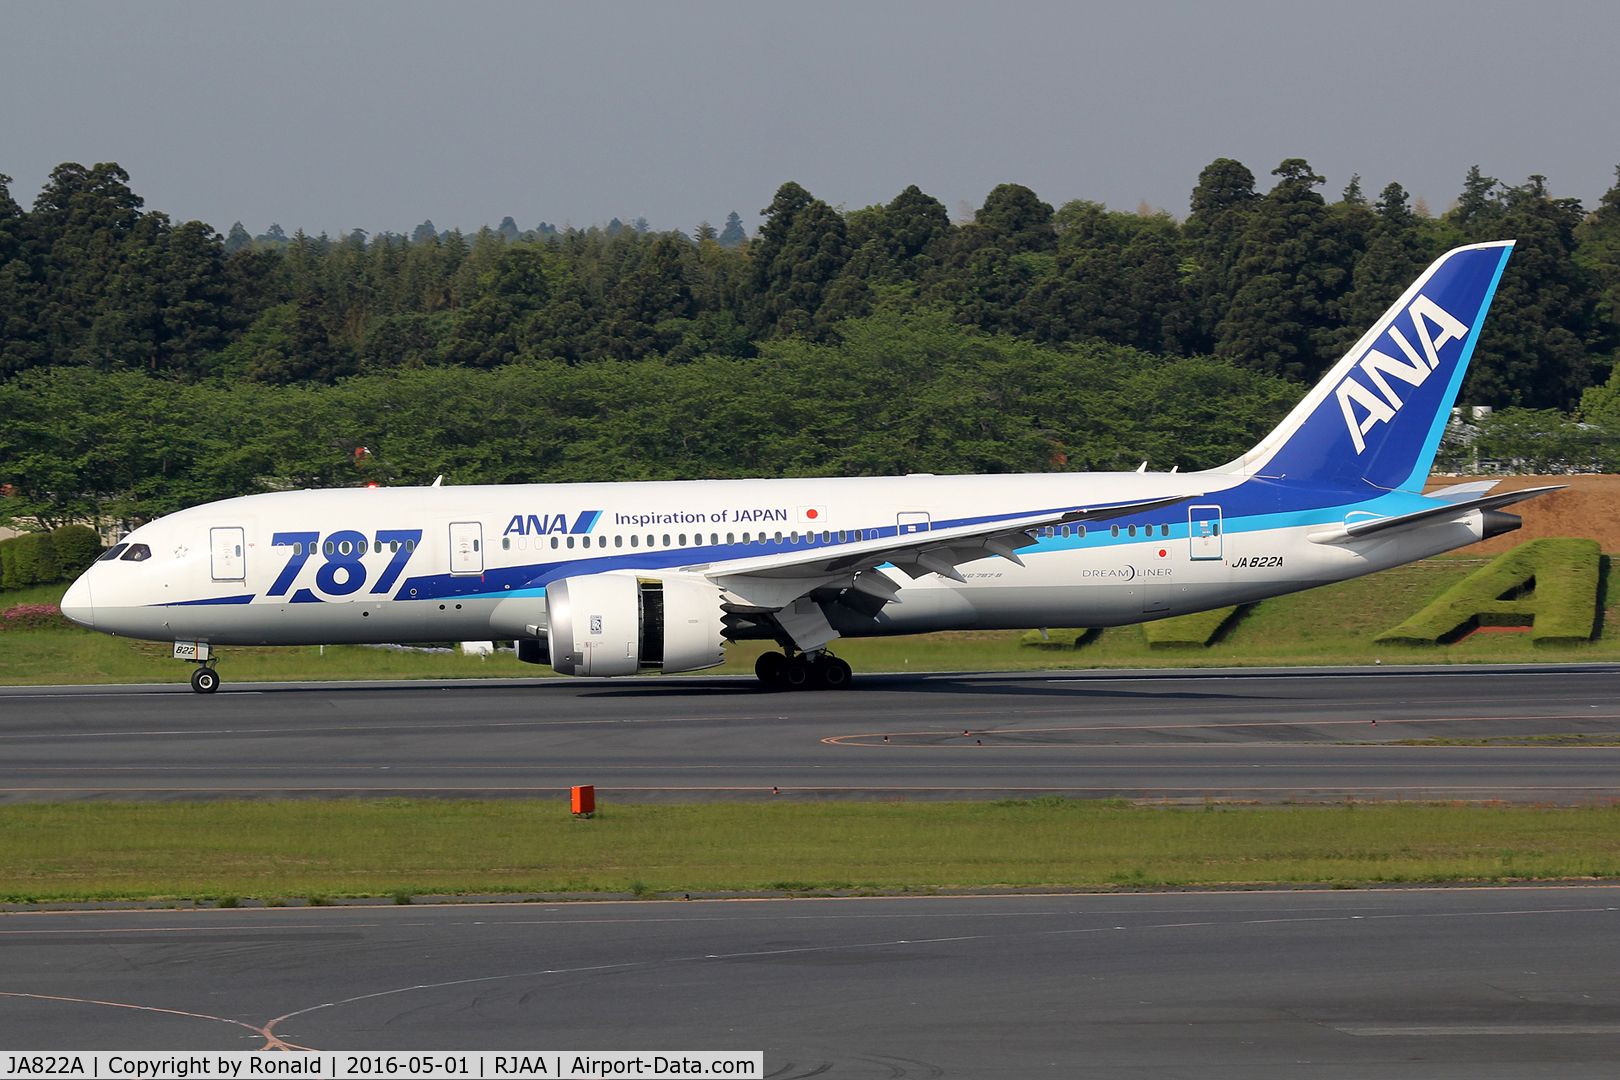 JA822A, 2013 Boeing 787-8 Dreamliner C/N 34512, at nrt